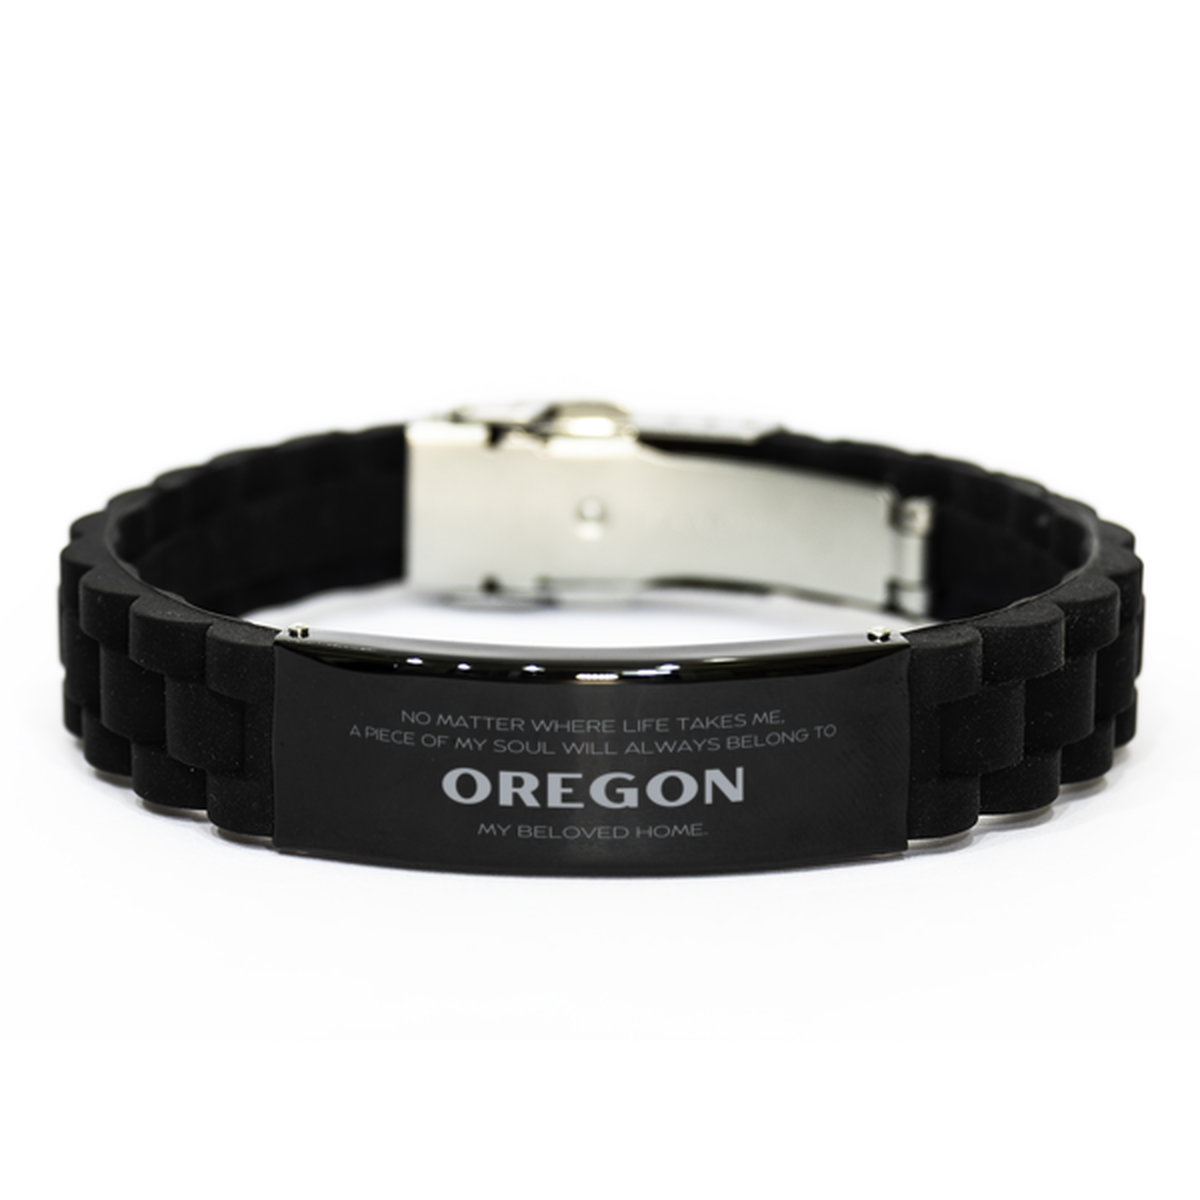 Love Oregon State Gifts, My soul will always belong to Oregon, Proud Black Glidelock Clasp Bracelet, Birthday Unique Gifts For Oregon Men, Women, Friends